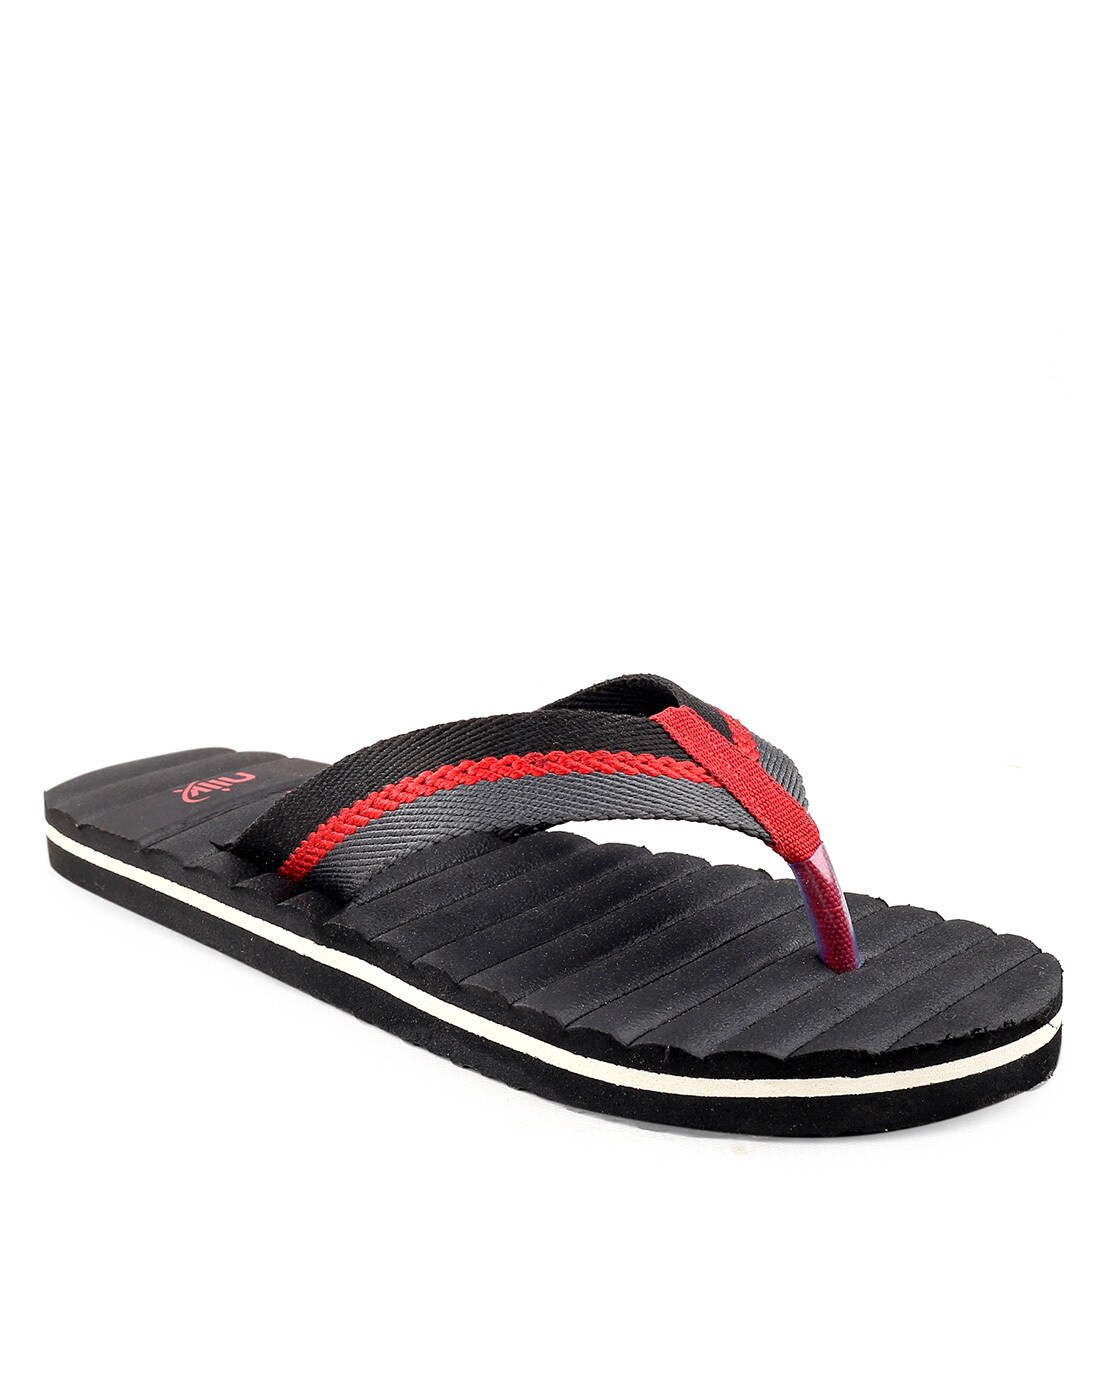 Tracker Sandals - Buy Tracker Sandals online in India